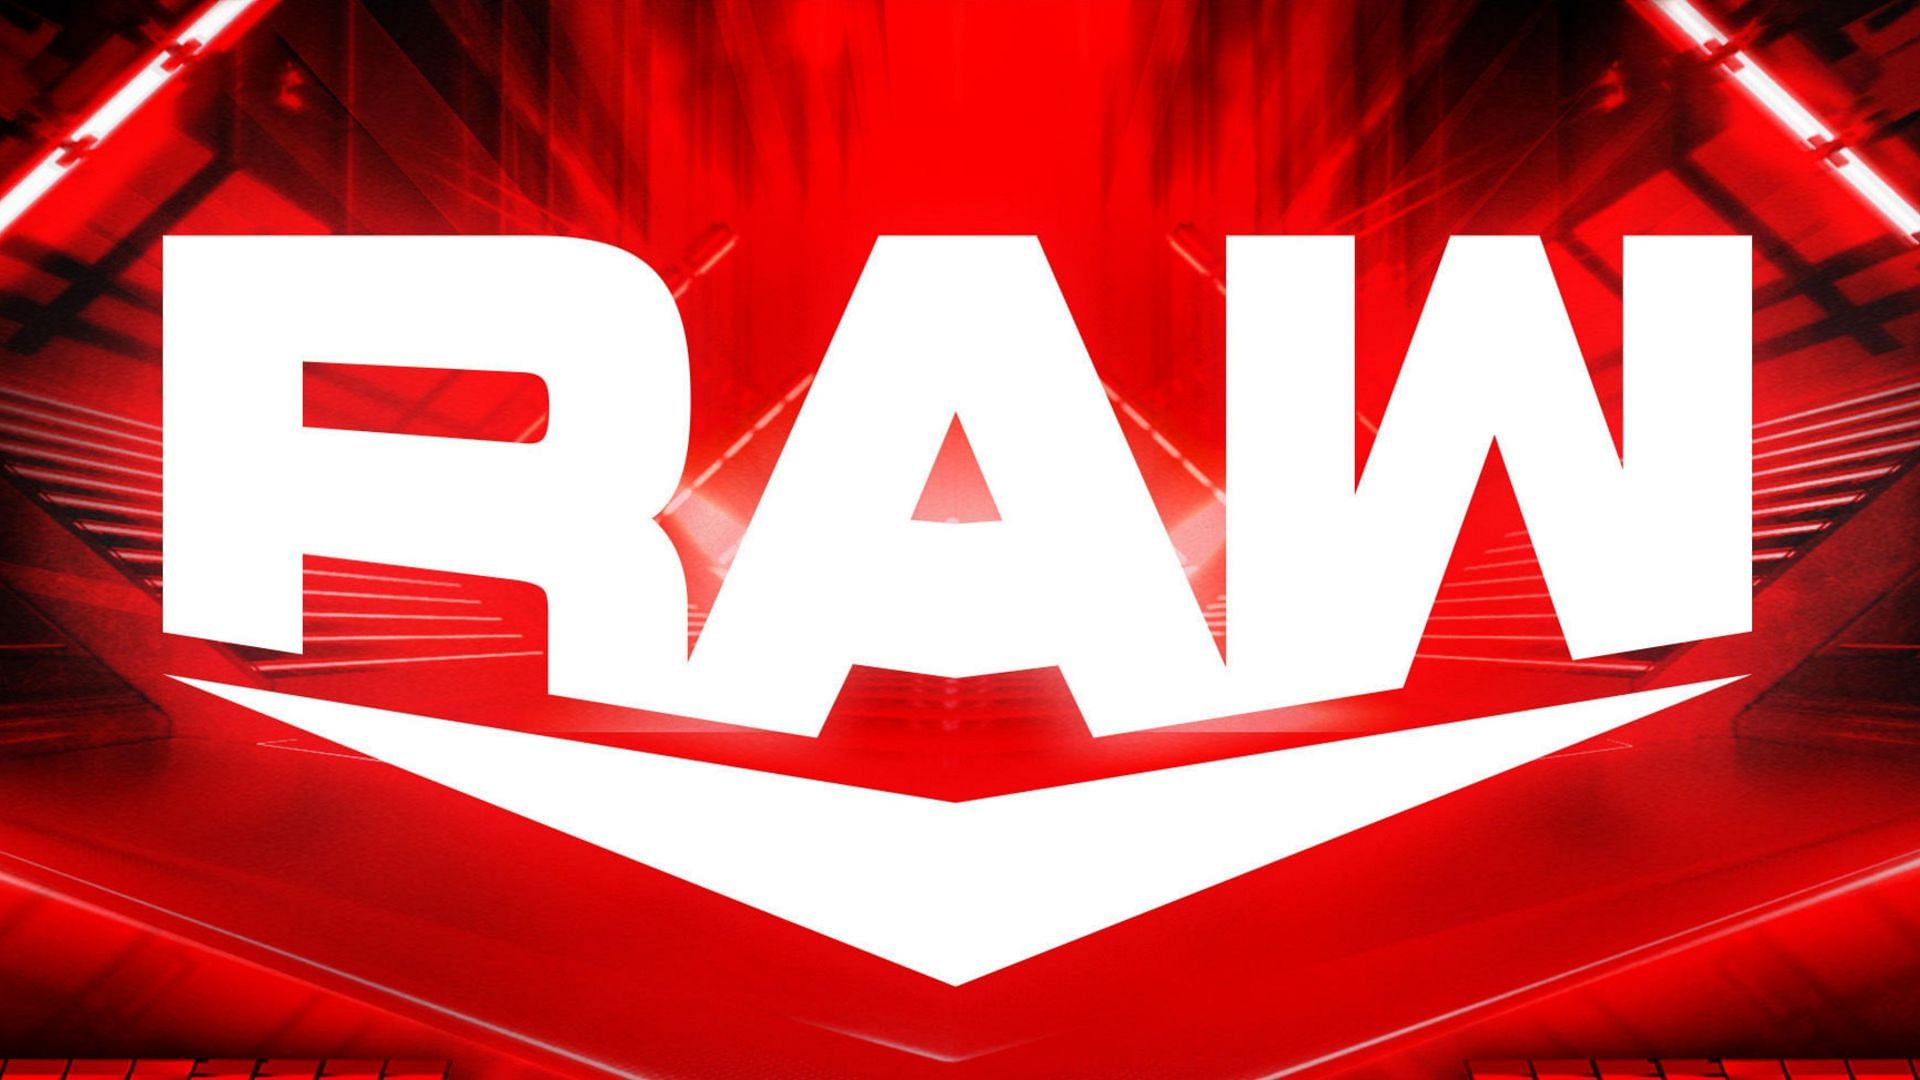 Matt Riddle returned to WWE RAW last week